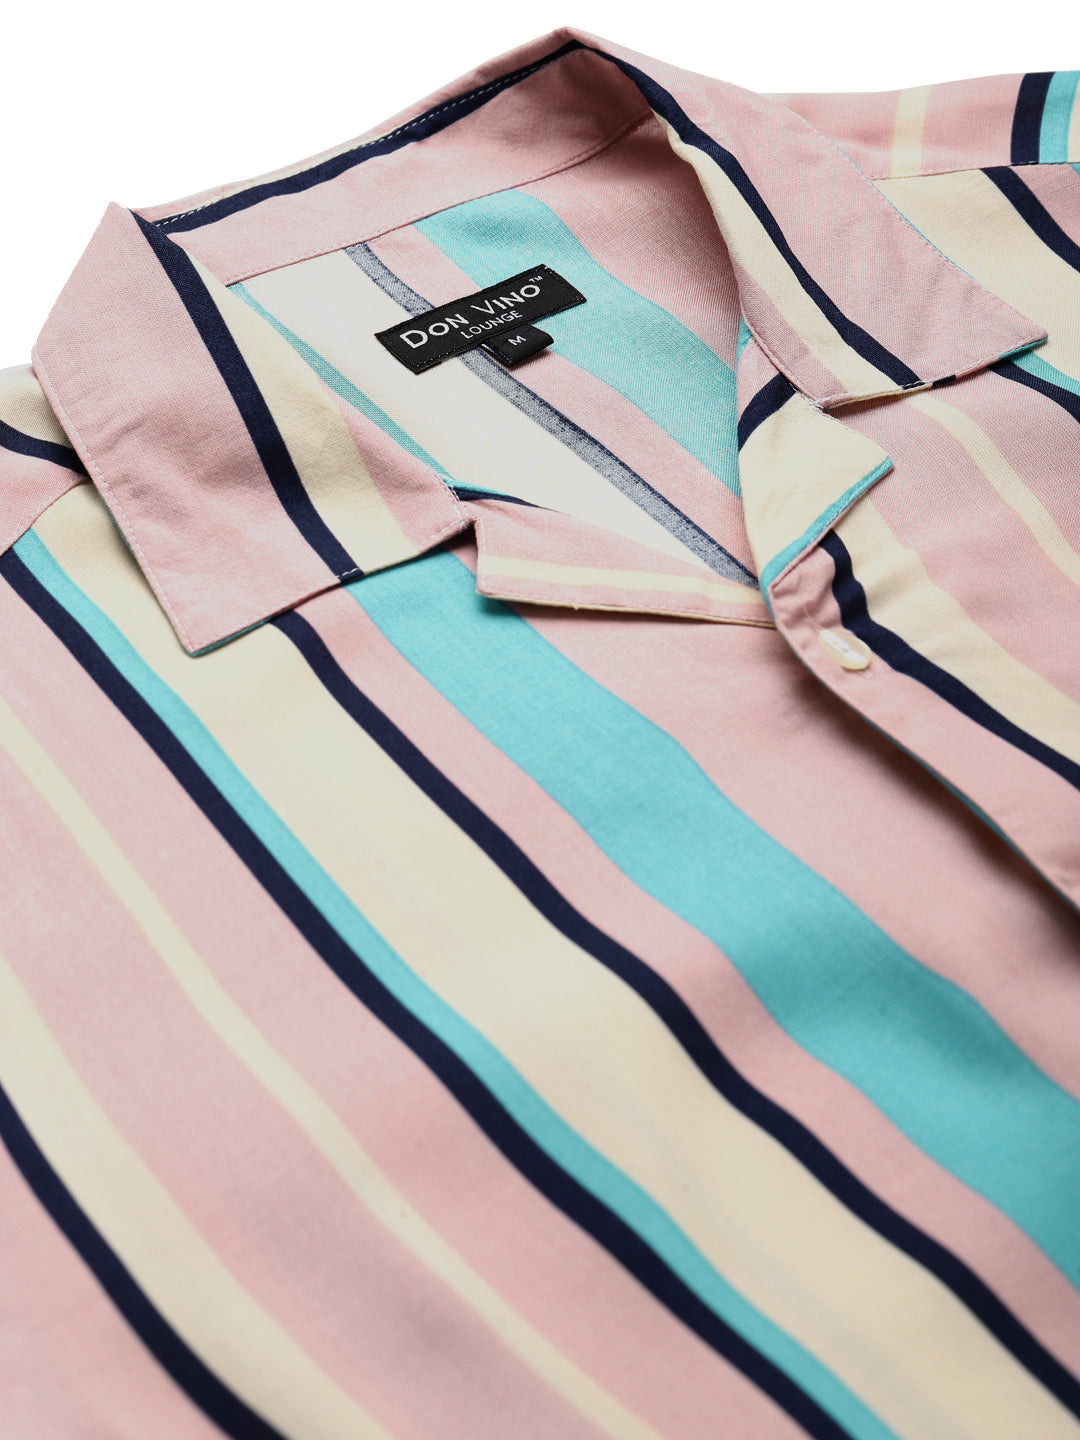 Don Vino Men's Multicolor Stripes Resort Shirt